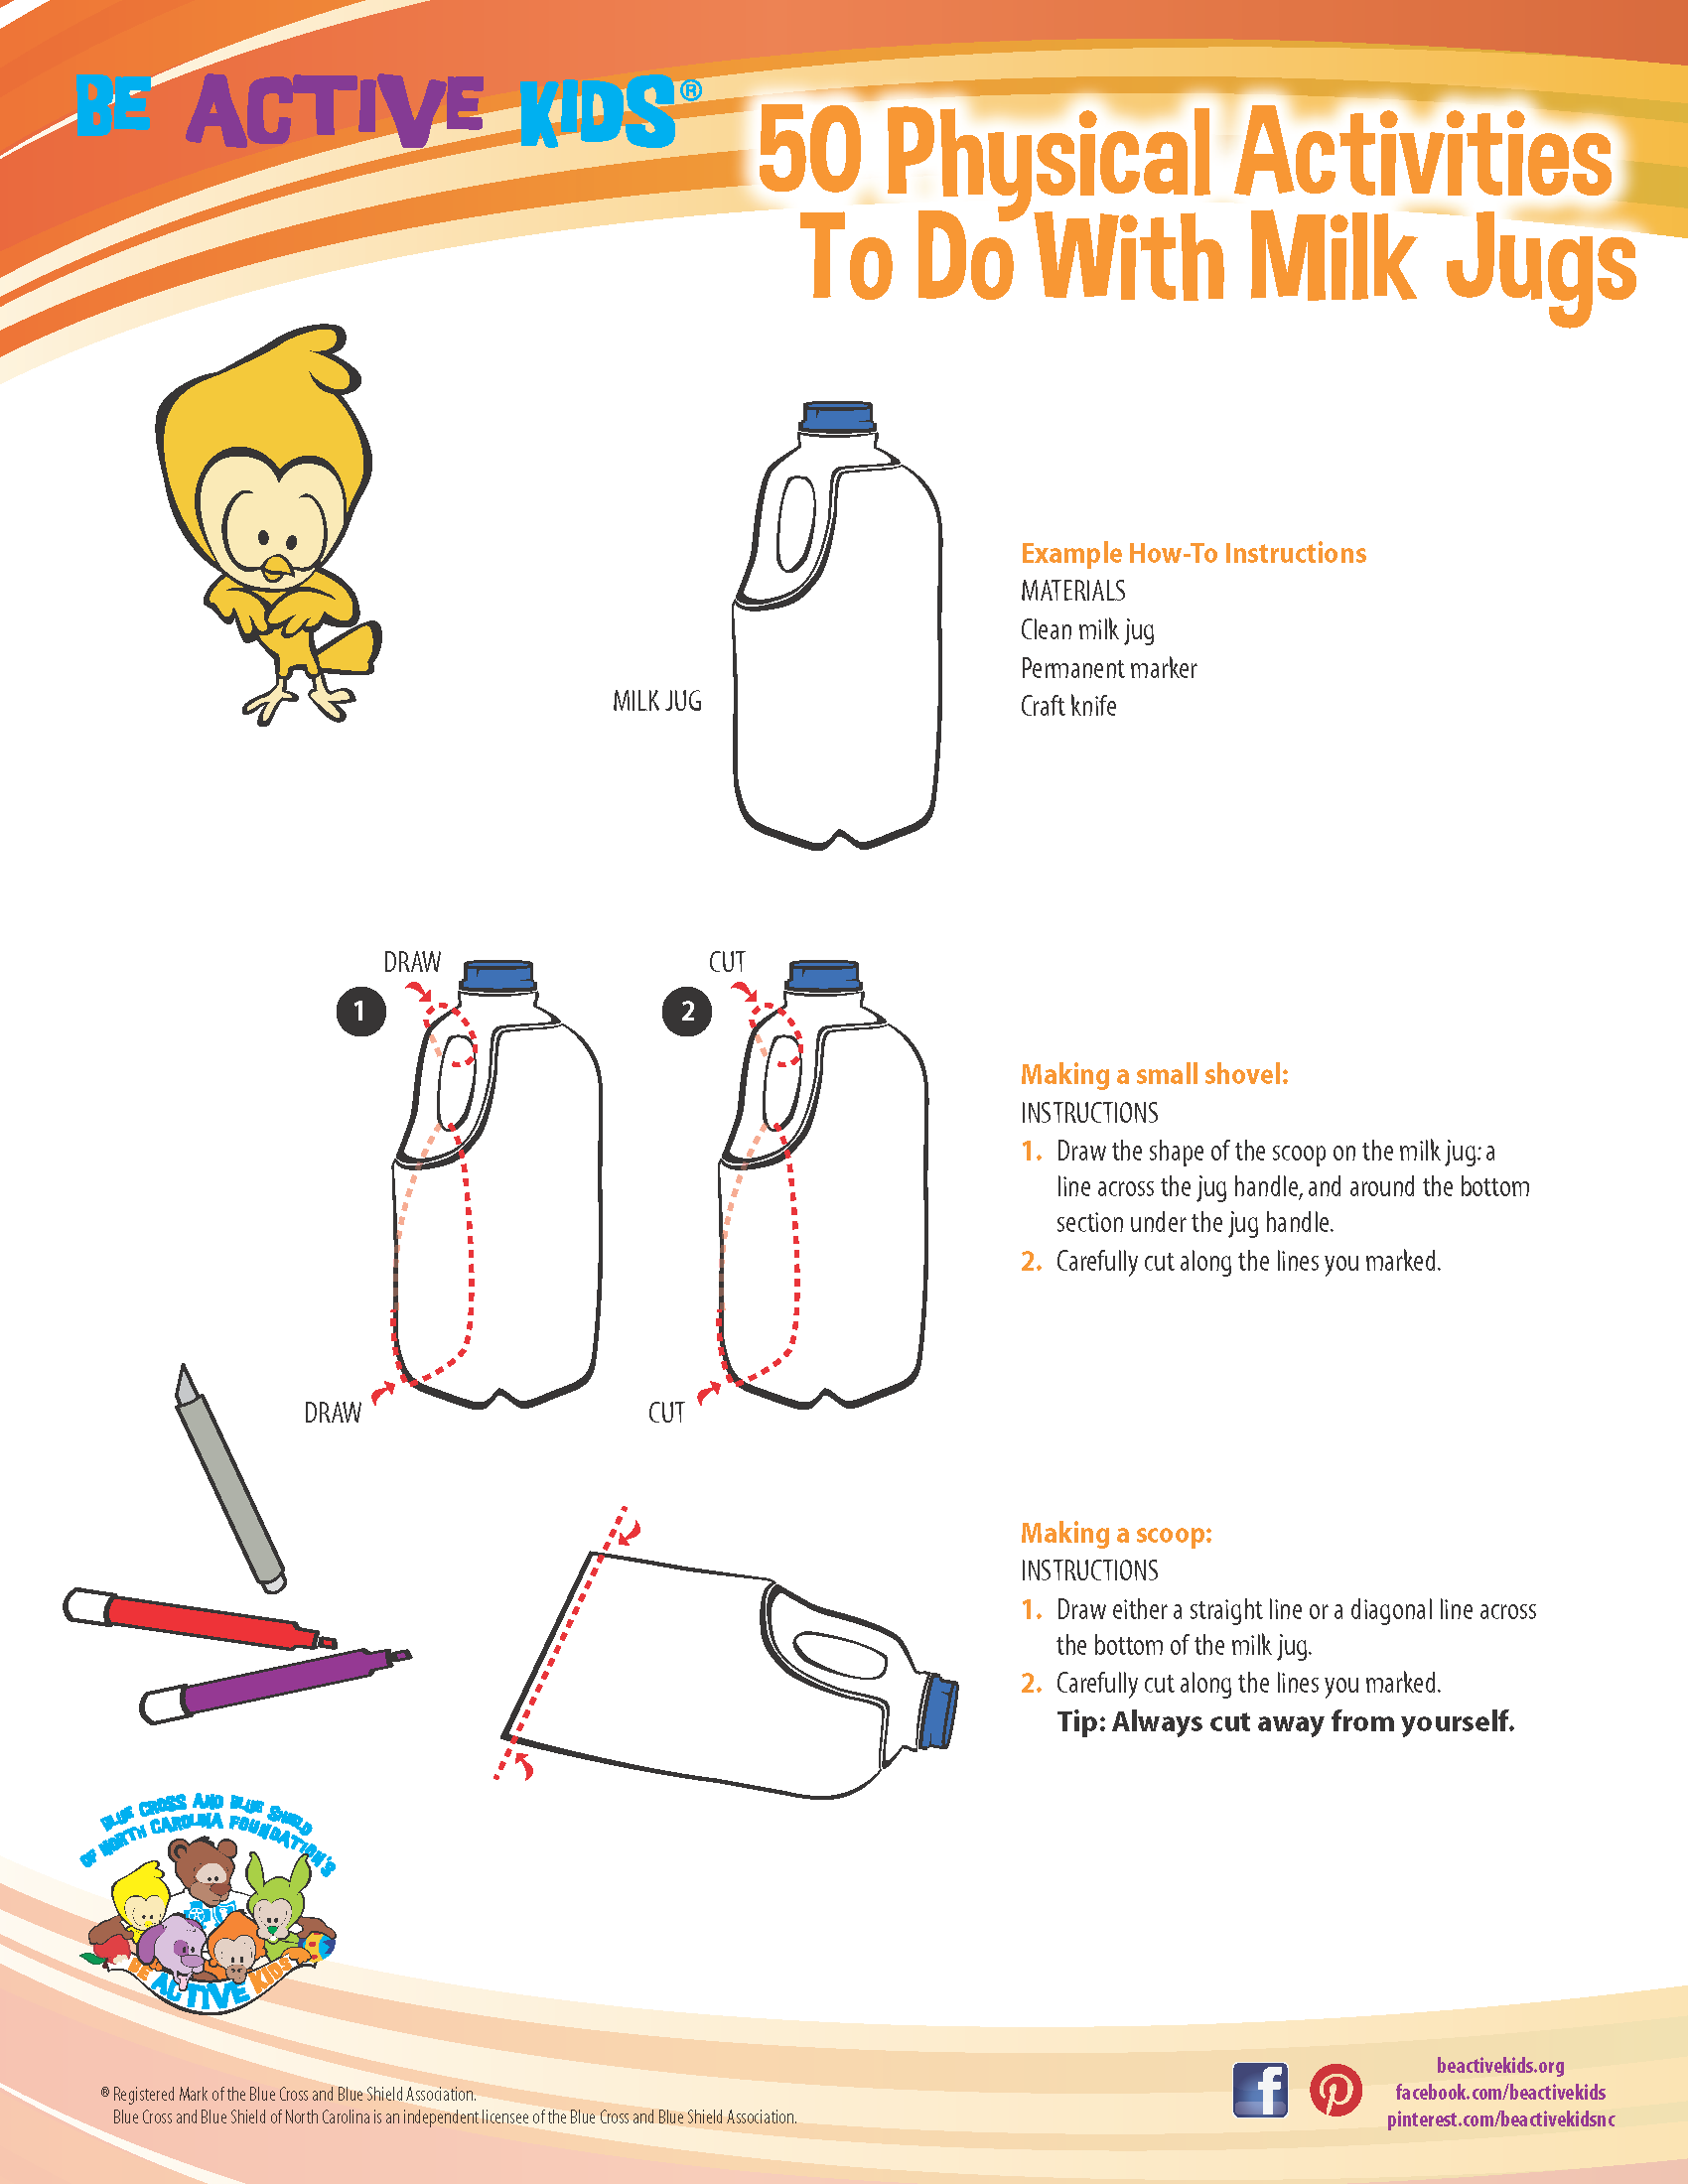 How to Make a Milk Jug Scoop